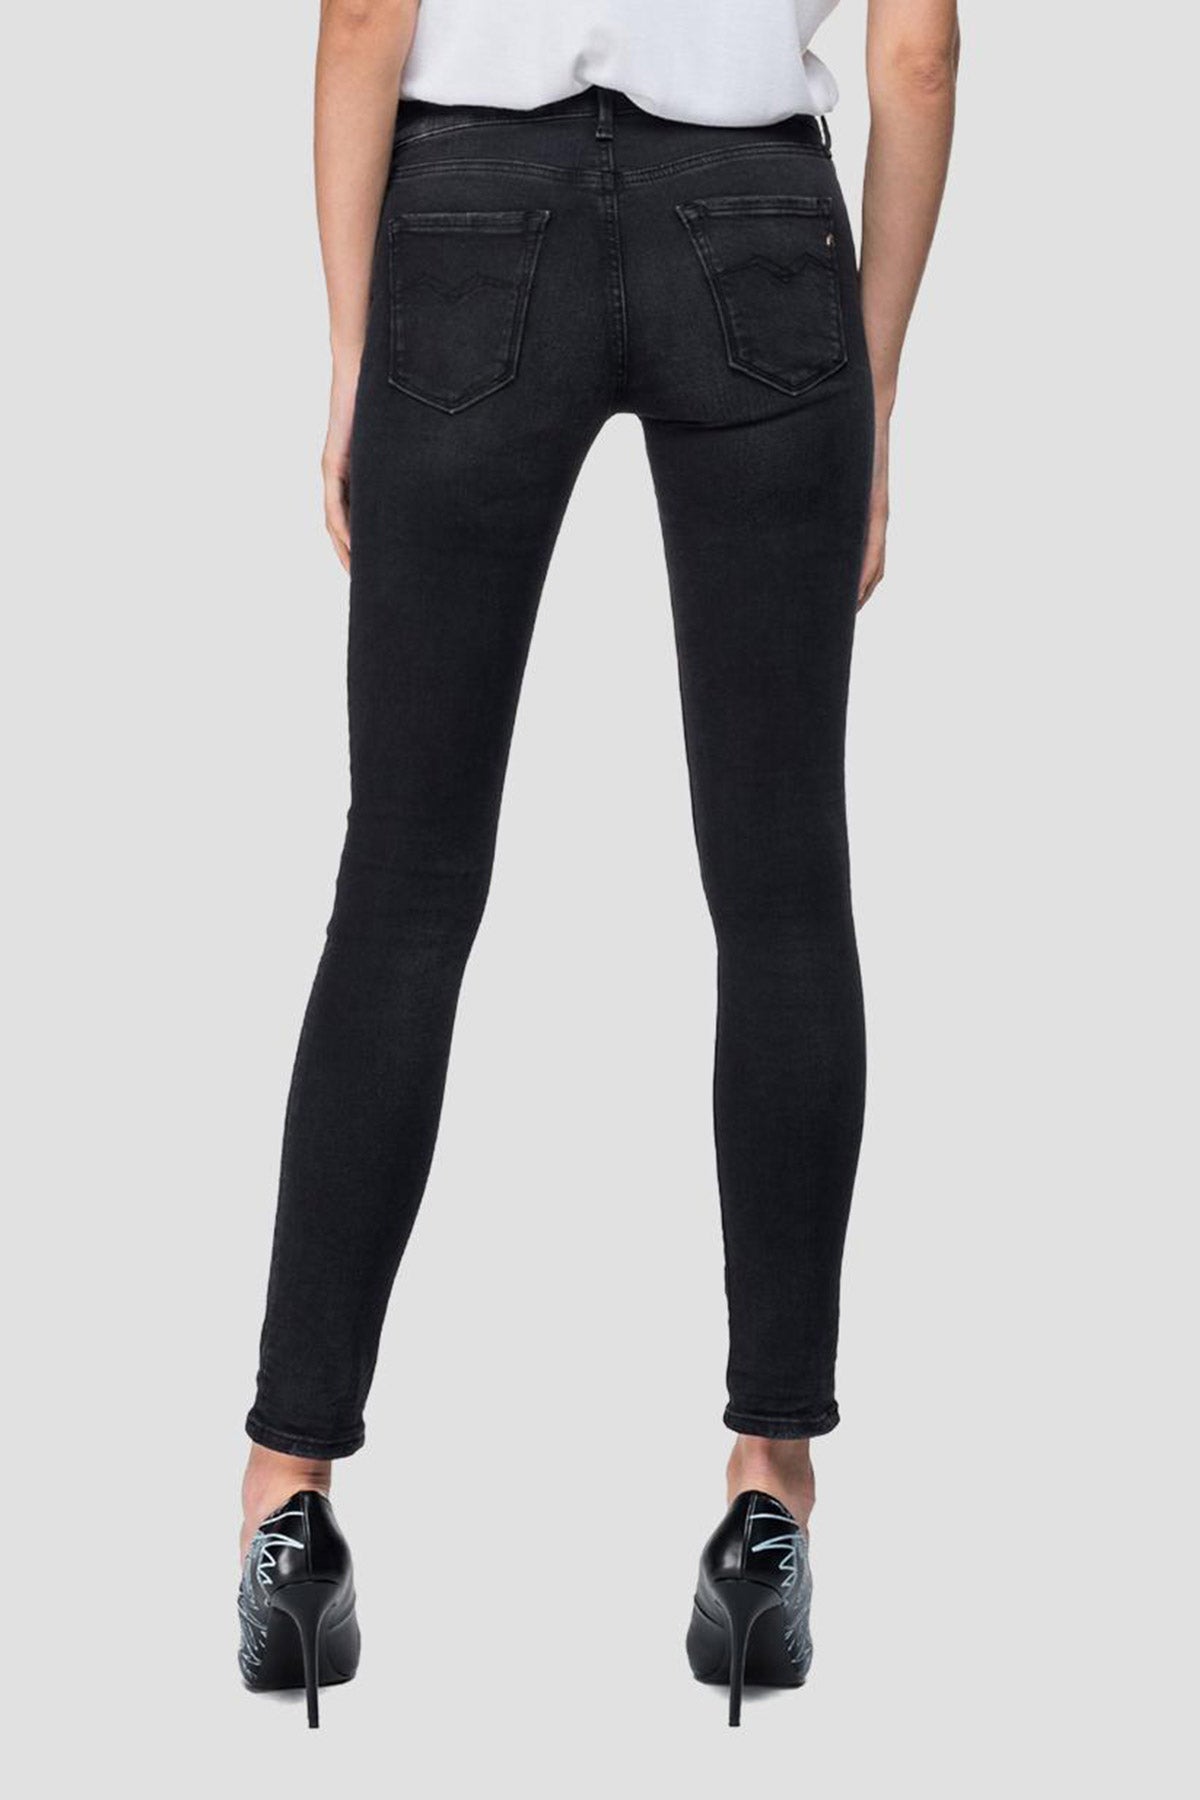 Replay Hyperflex New Luz Skinny Fit Jeans-Libas Trendy Fashion Store